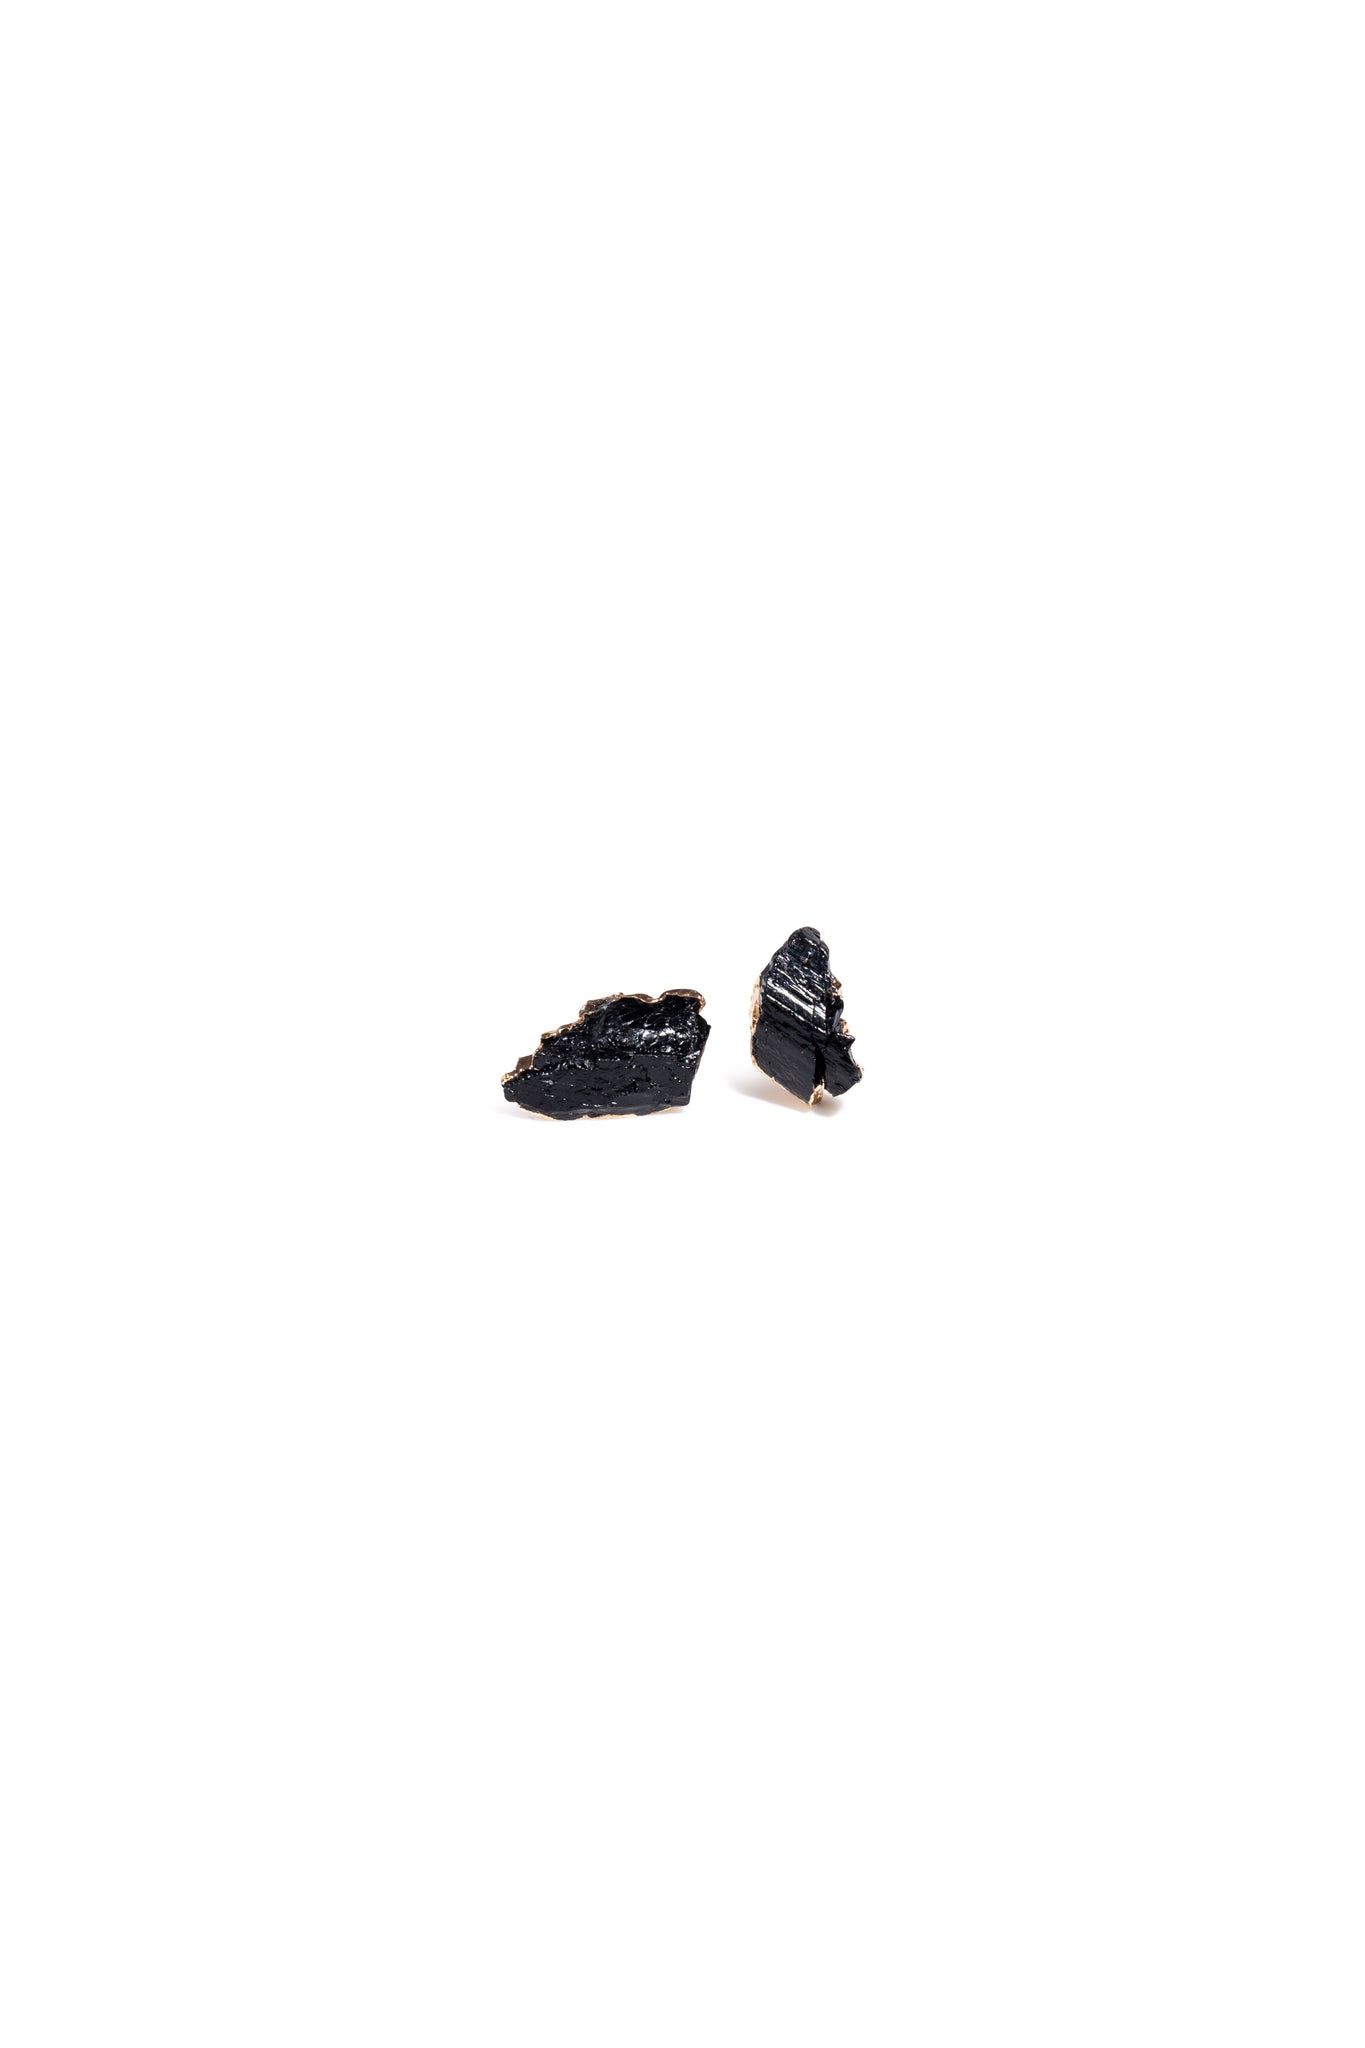 Black Tourmaline Crystal Studded Earrings SACRAL + ROOT